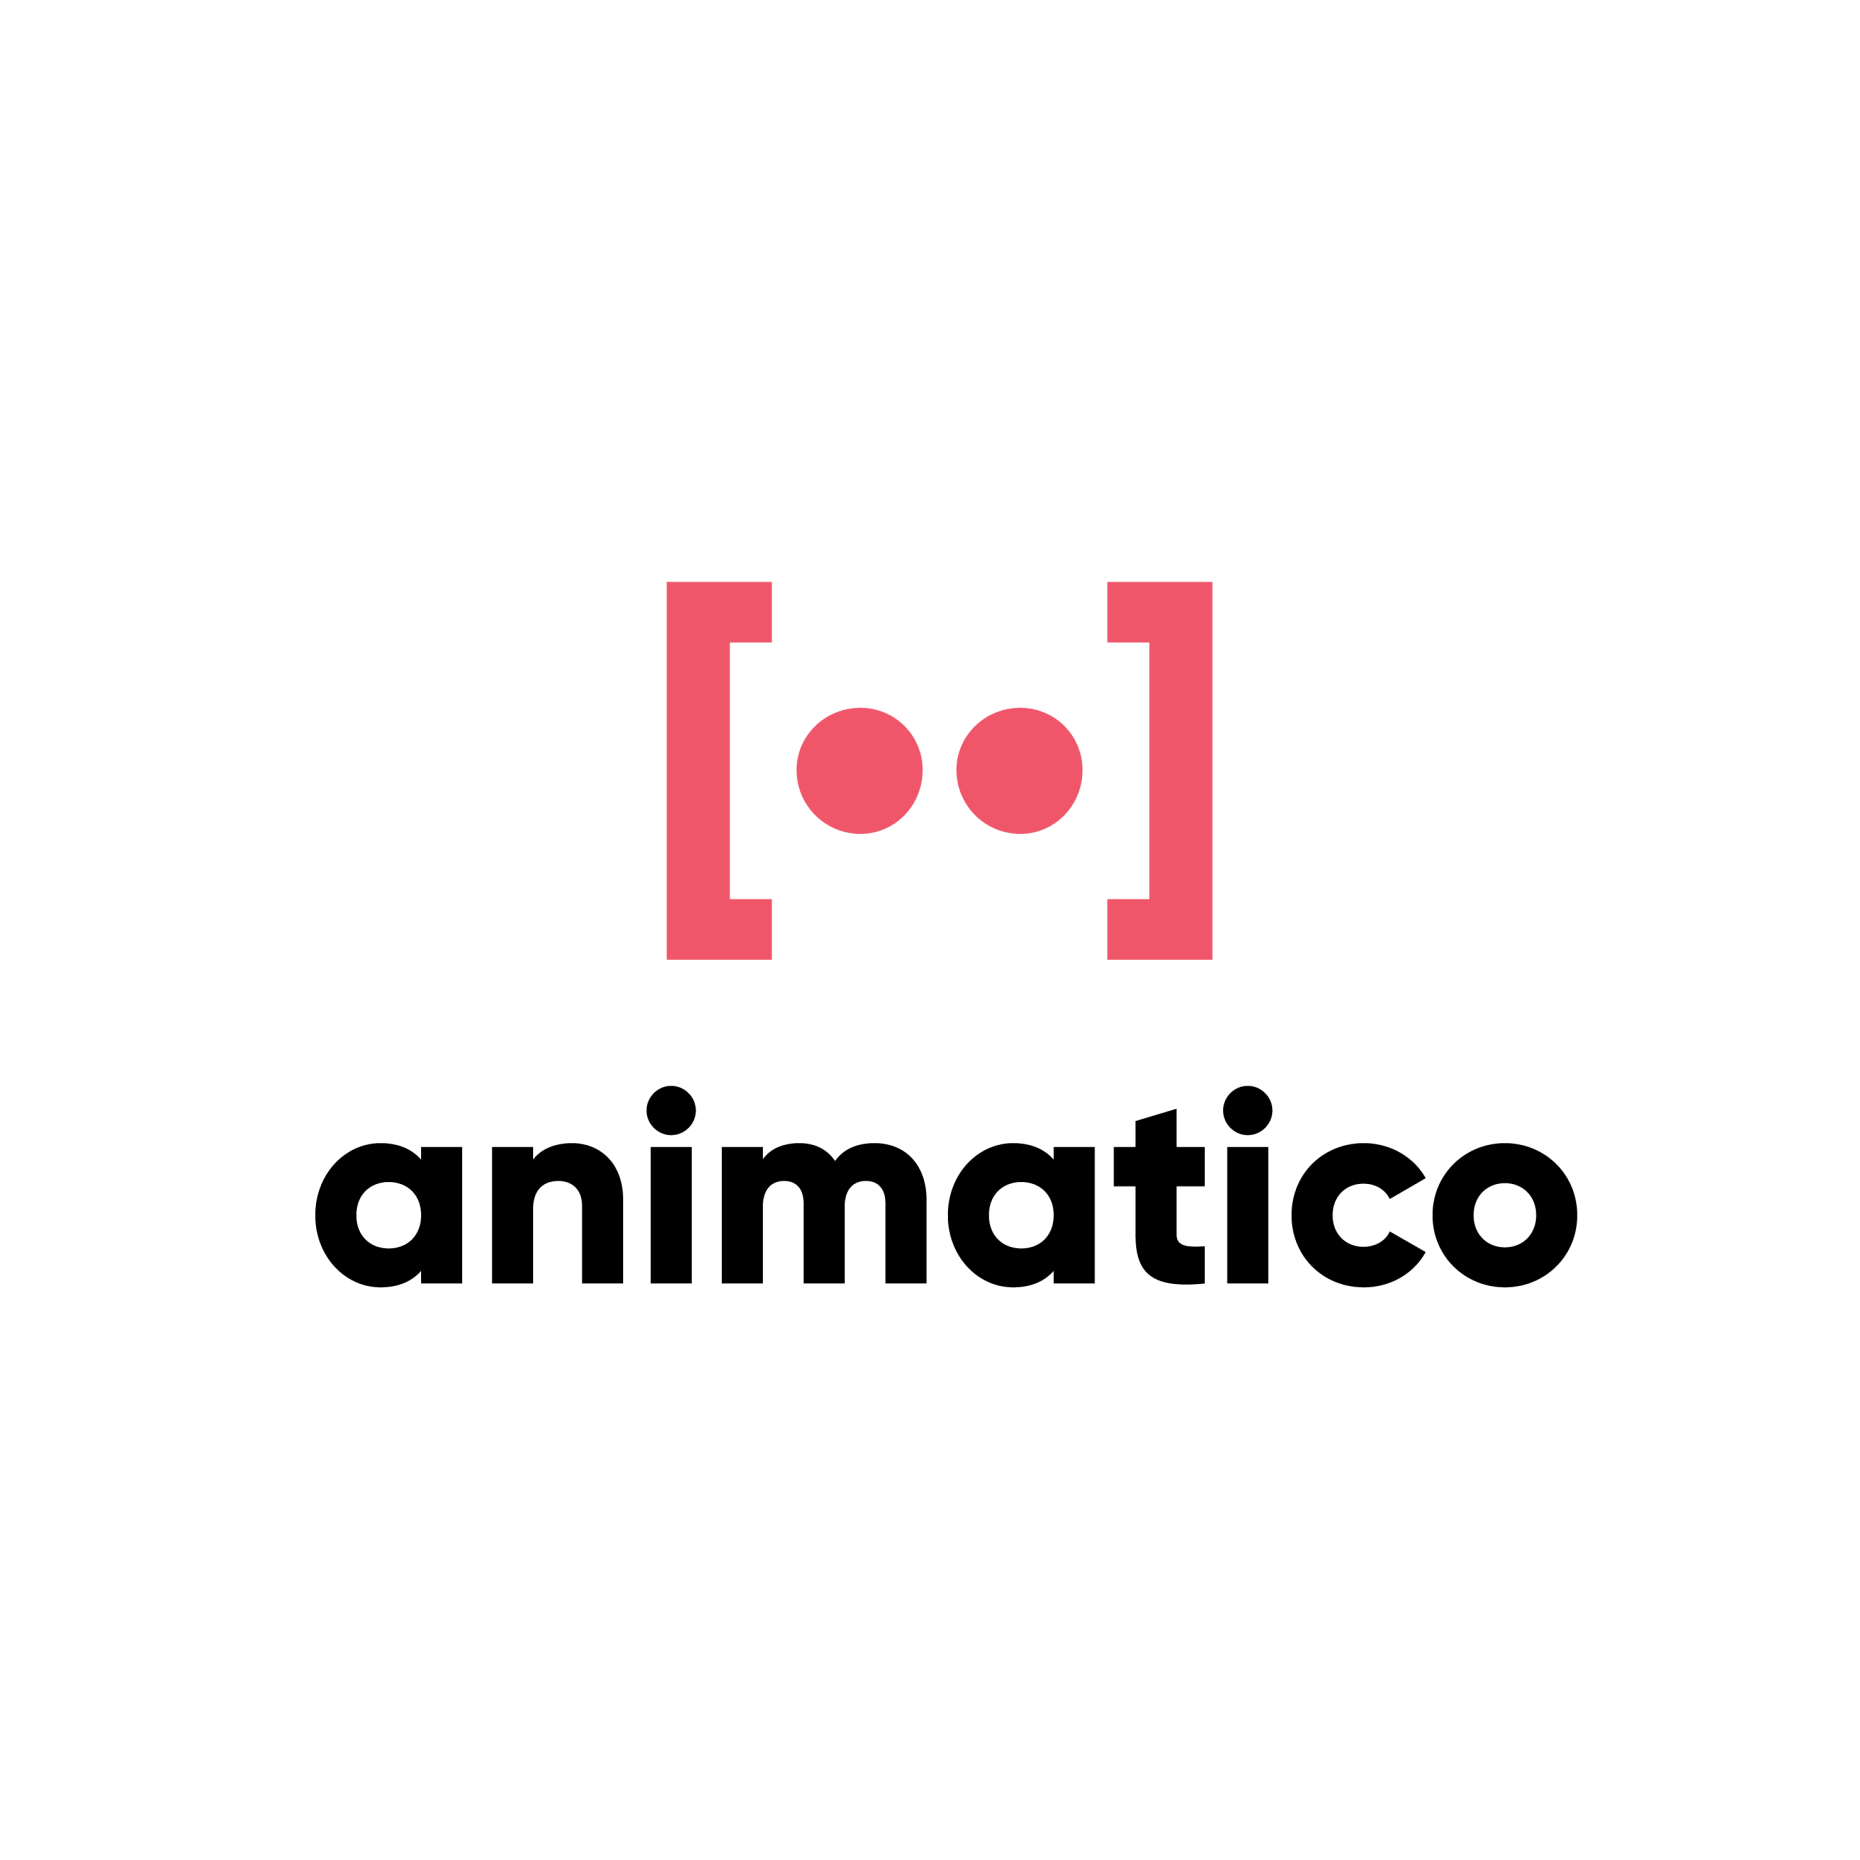 Animatico website